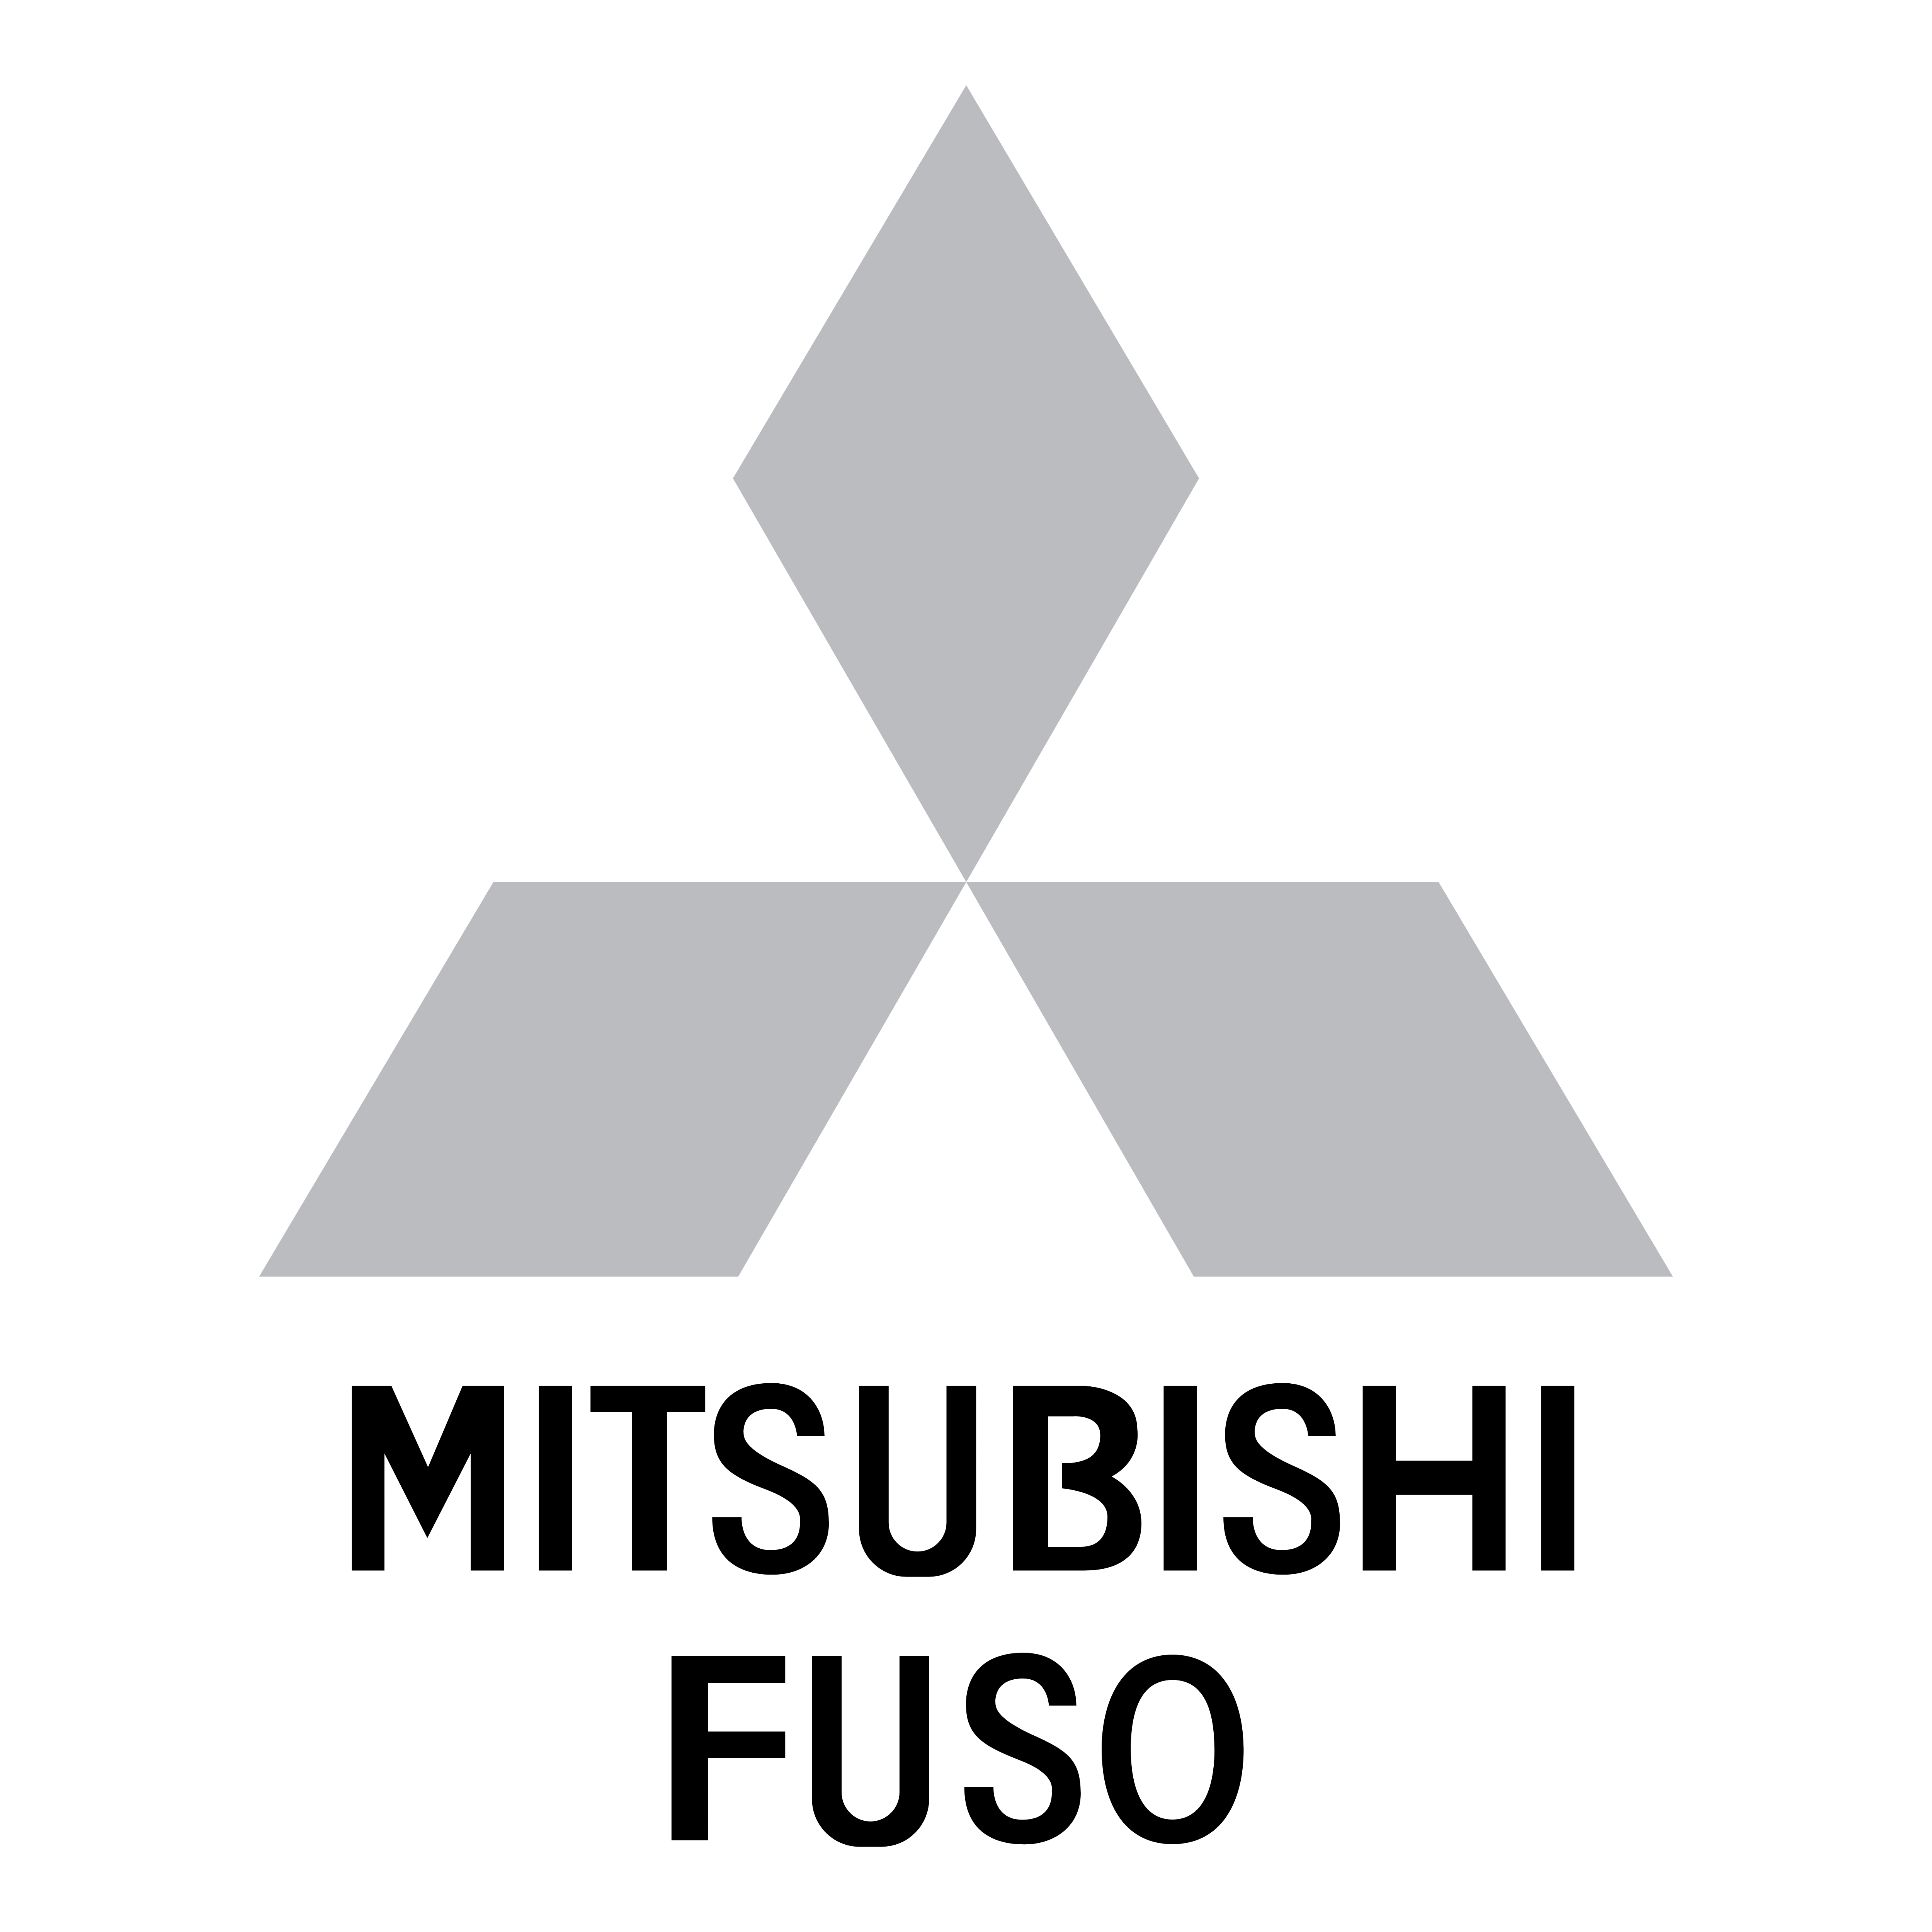 Mitsubishi название. Эмблема Мицубиси. Логотип Mitsubishi Motors. Логотип Митсубиси Фусо. Мицубиси логотип вектор.